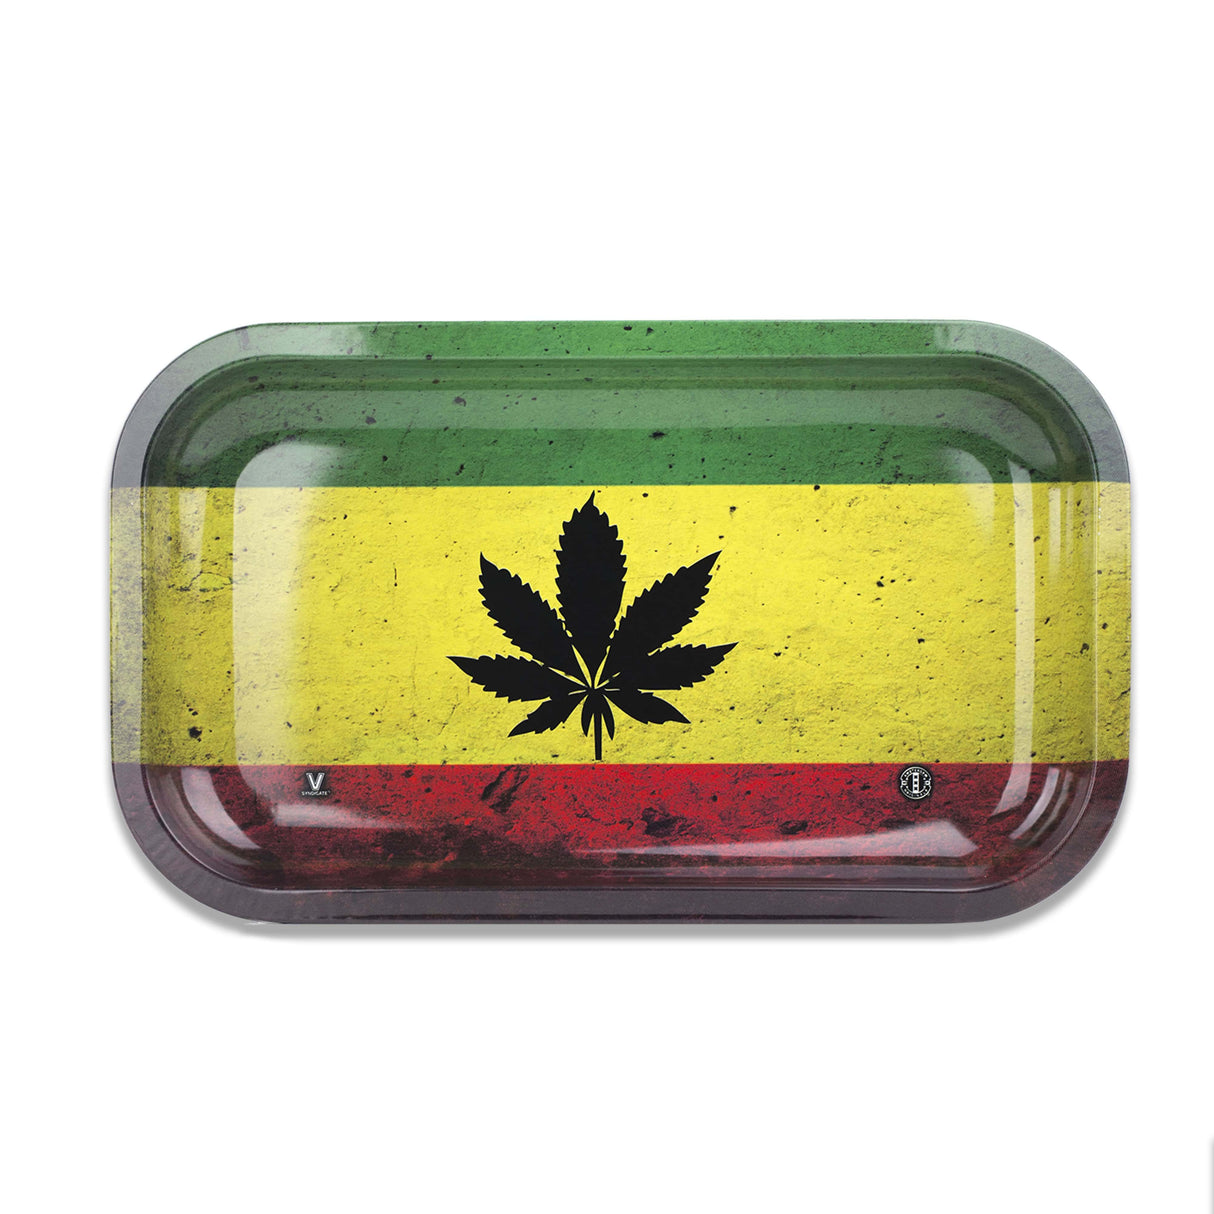 V Syndicate Rasta Leaf Metal Rolling Tray in Medium Size with Rastafarian Flag Colors